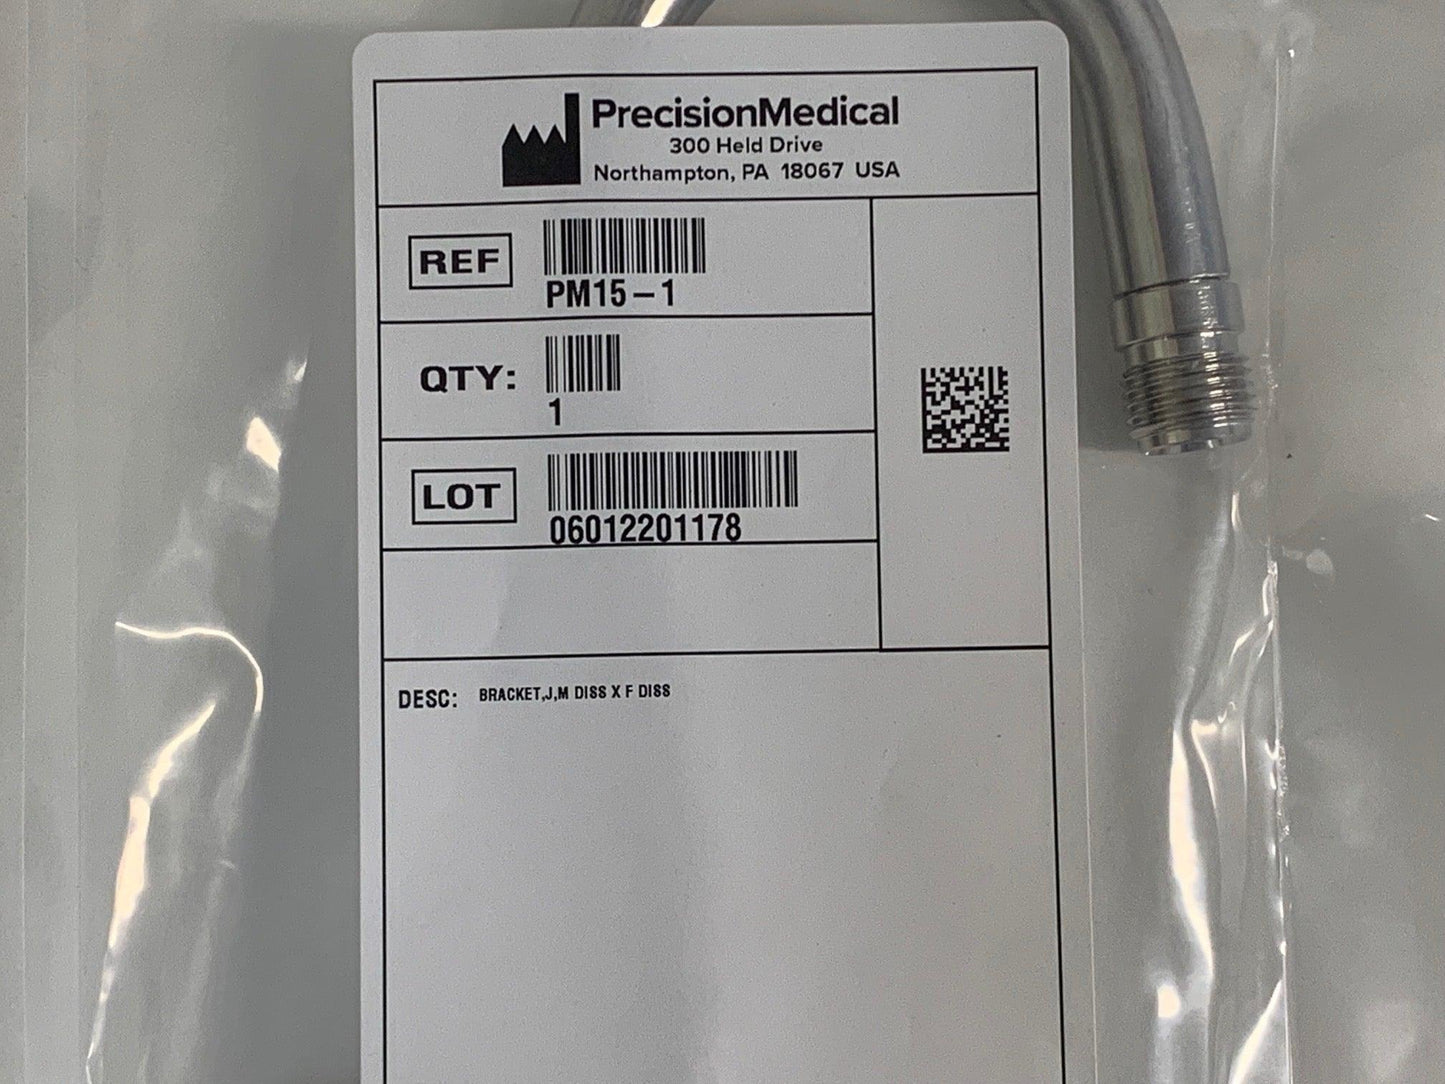 NEW Precision Medical Compressor J Bracket PM15-1